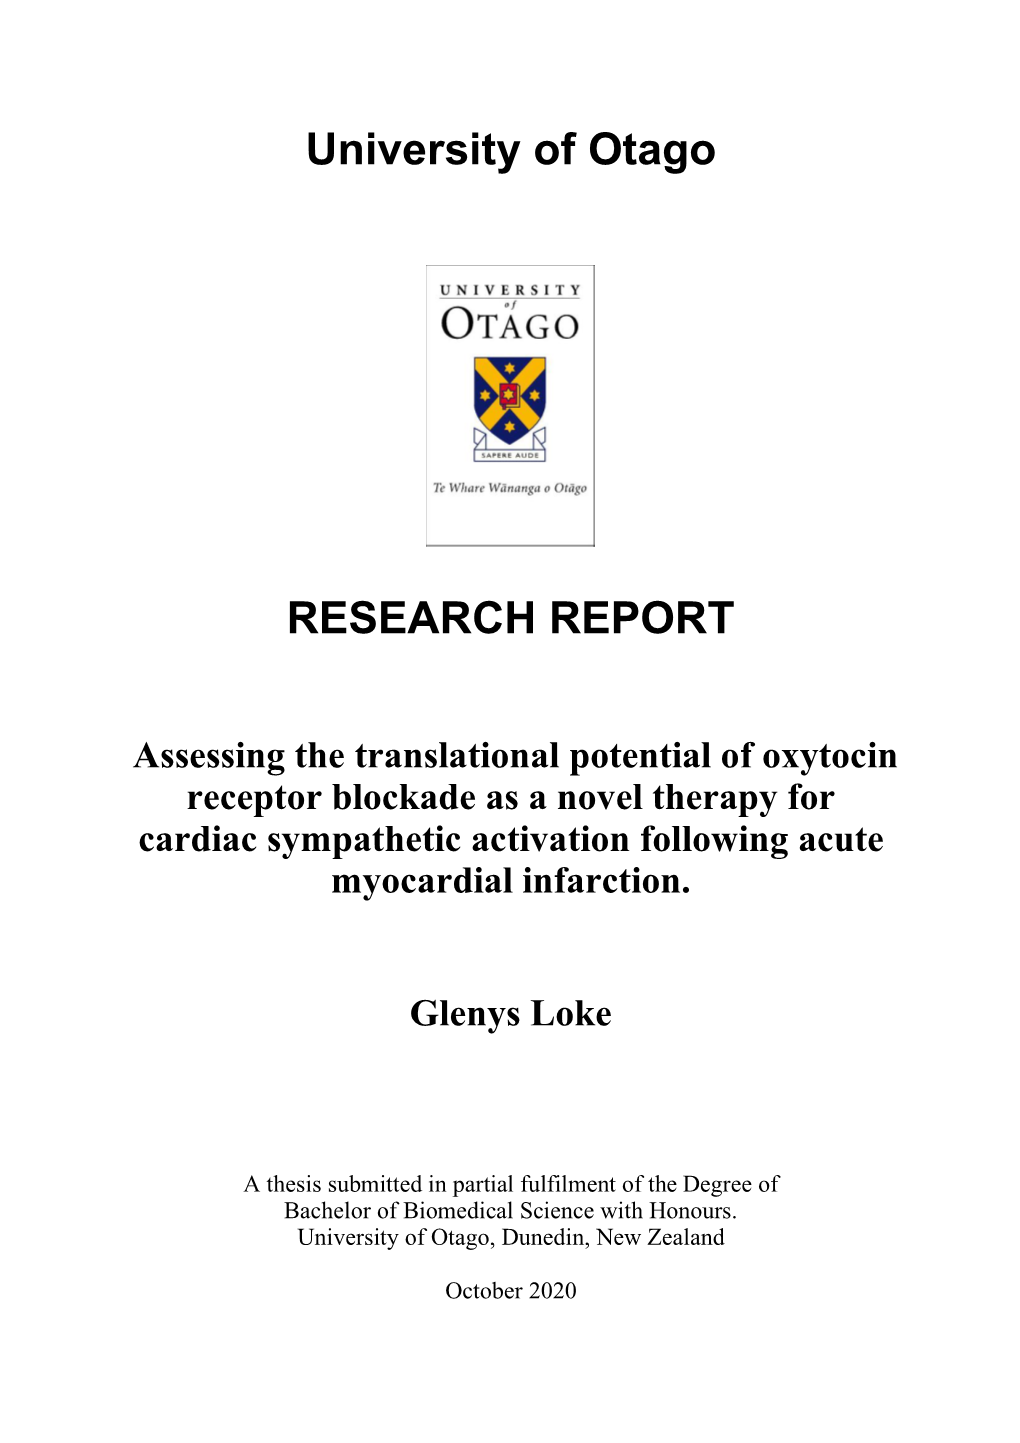 University of Otago RESEARCH REPORT